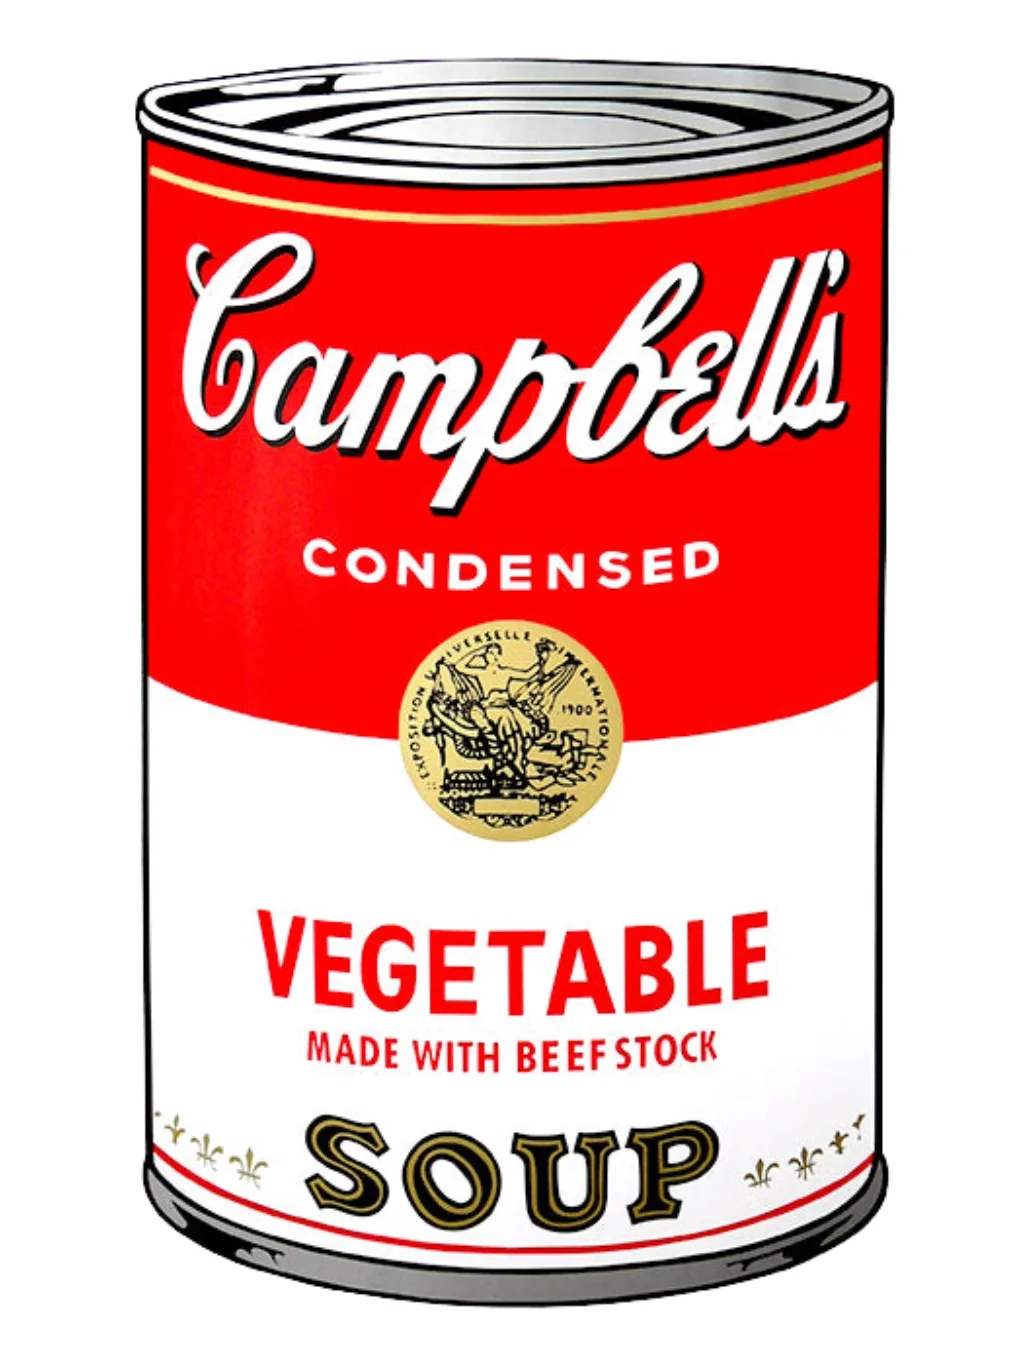 Sopa Campbell's Andy Warhol